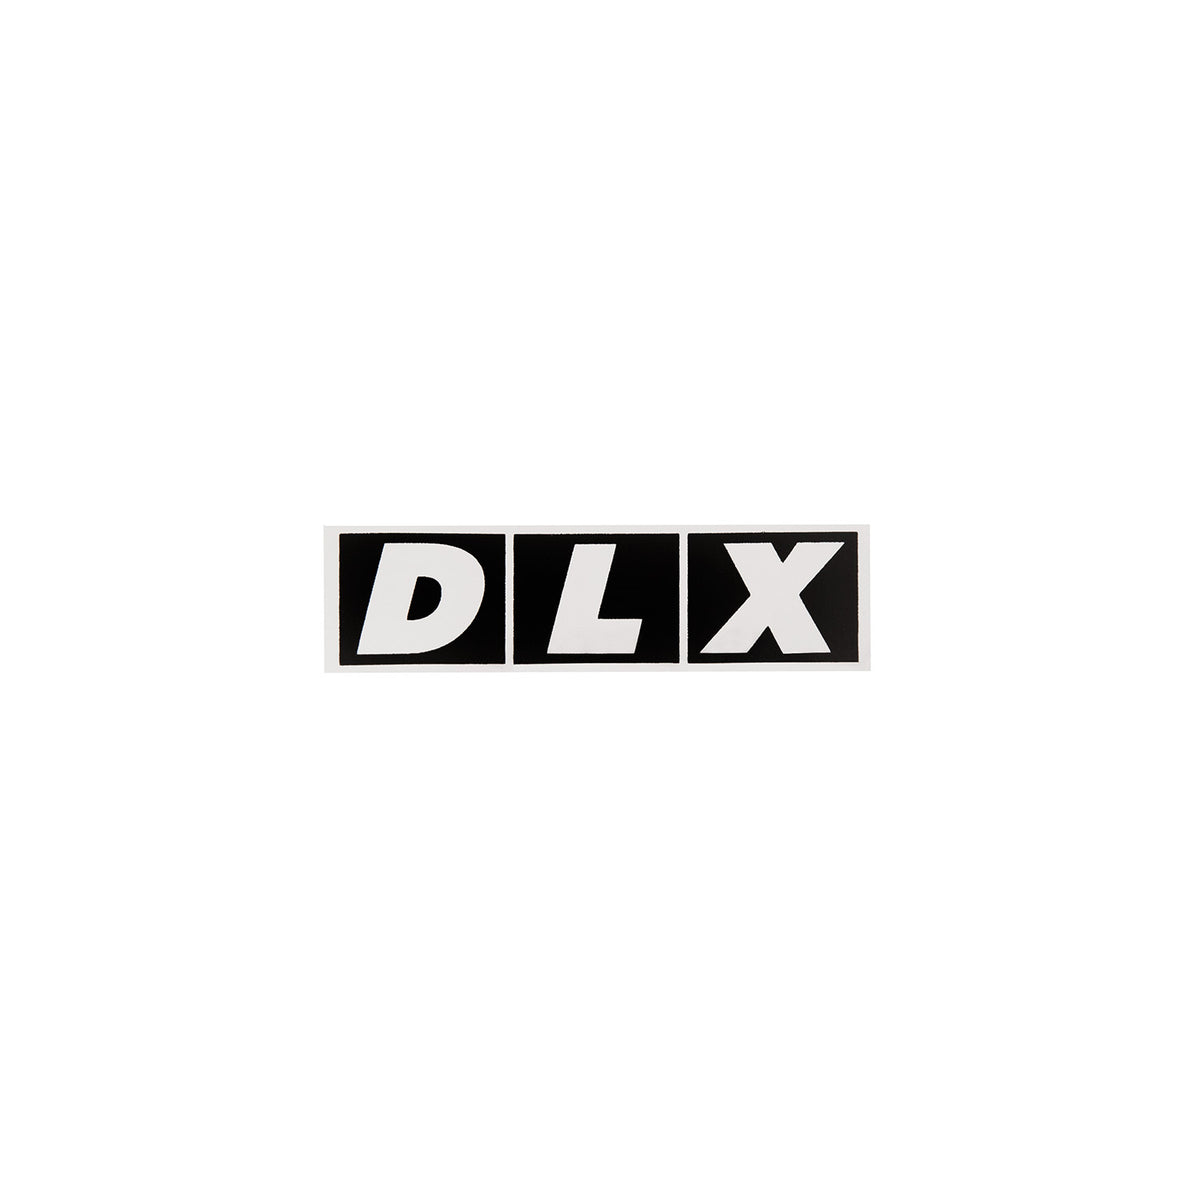 DLX Small Sticker Pack